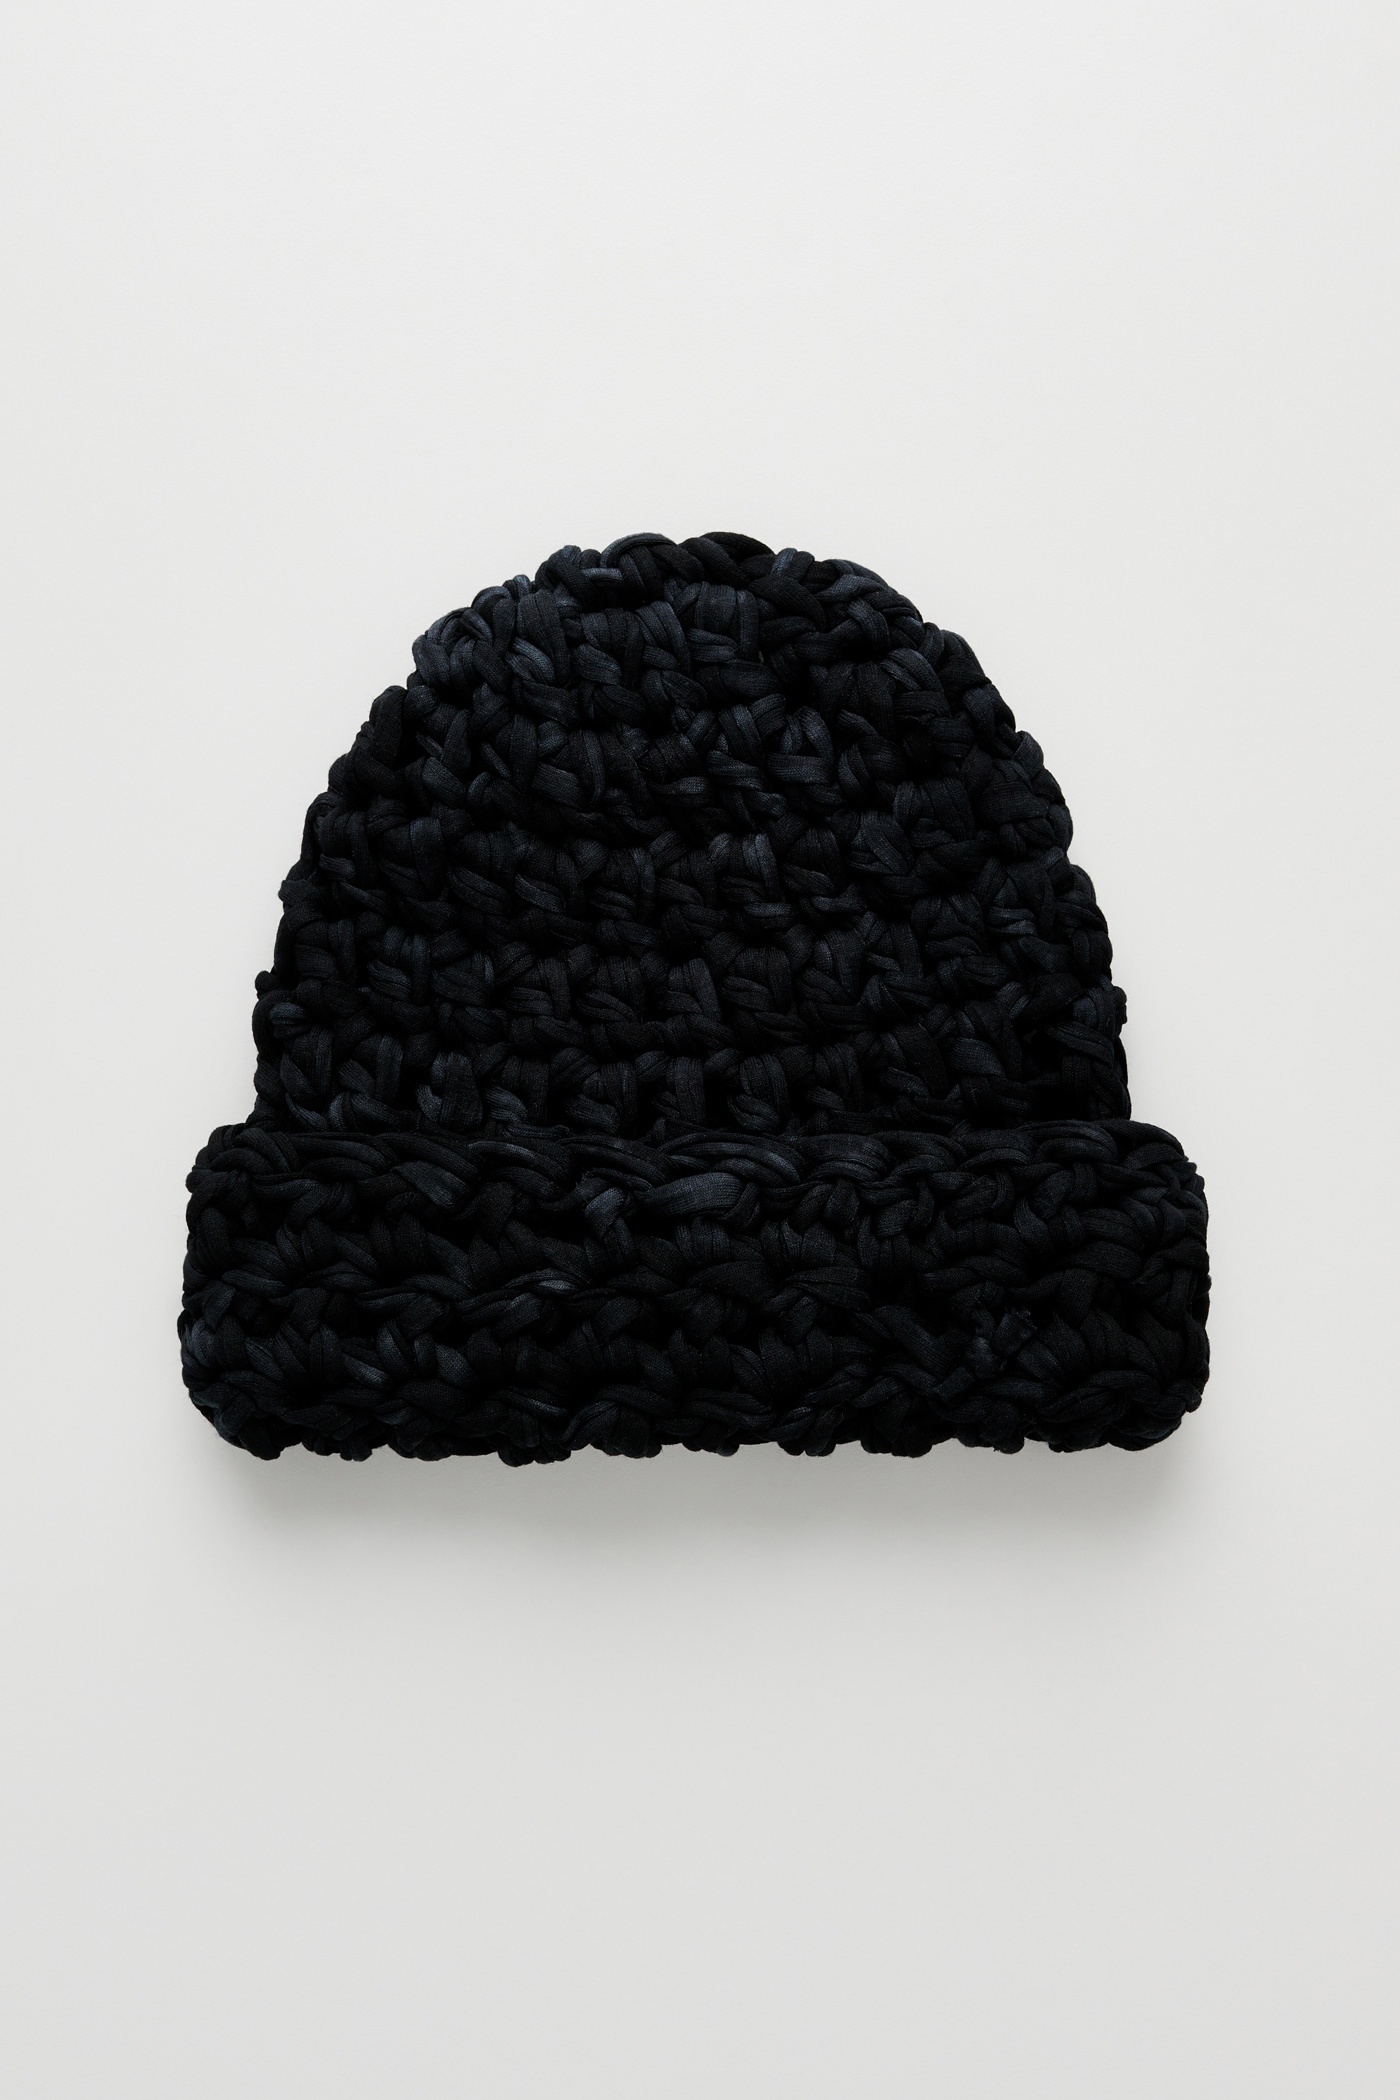 Crochet Beanie Overdyed Black Jersey - 1